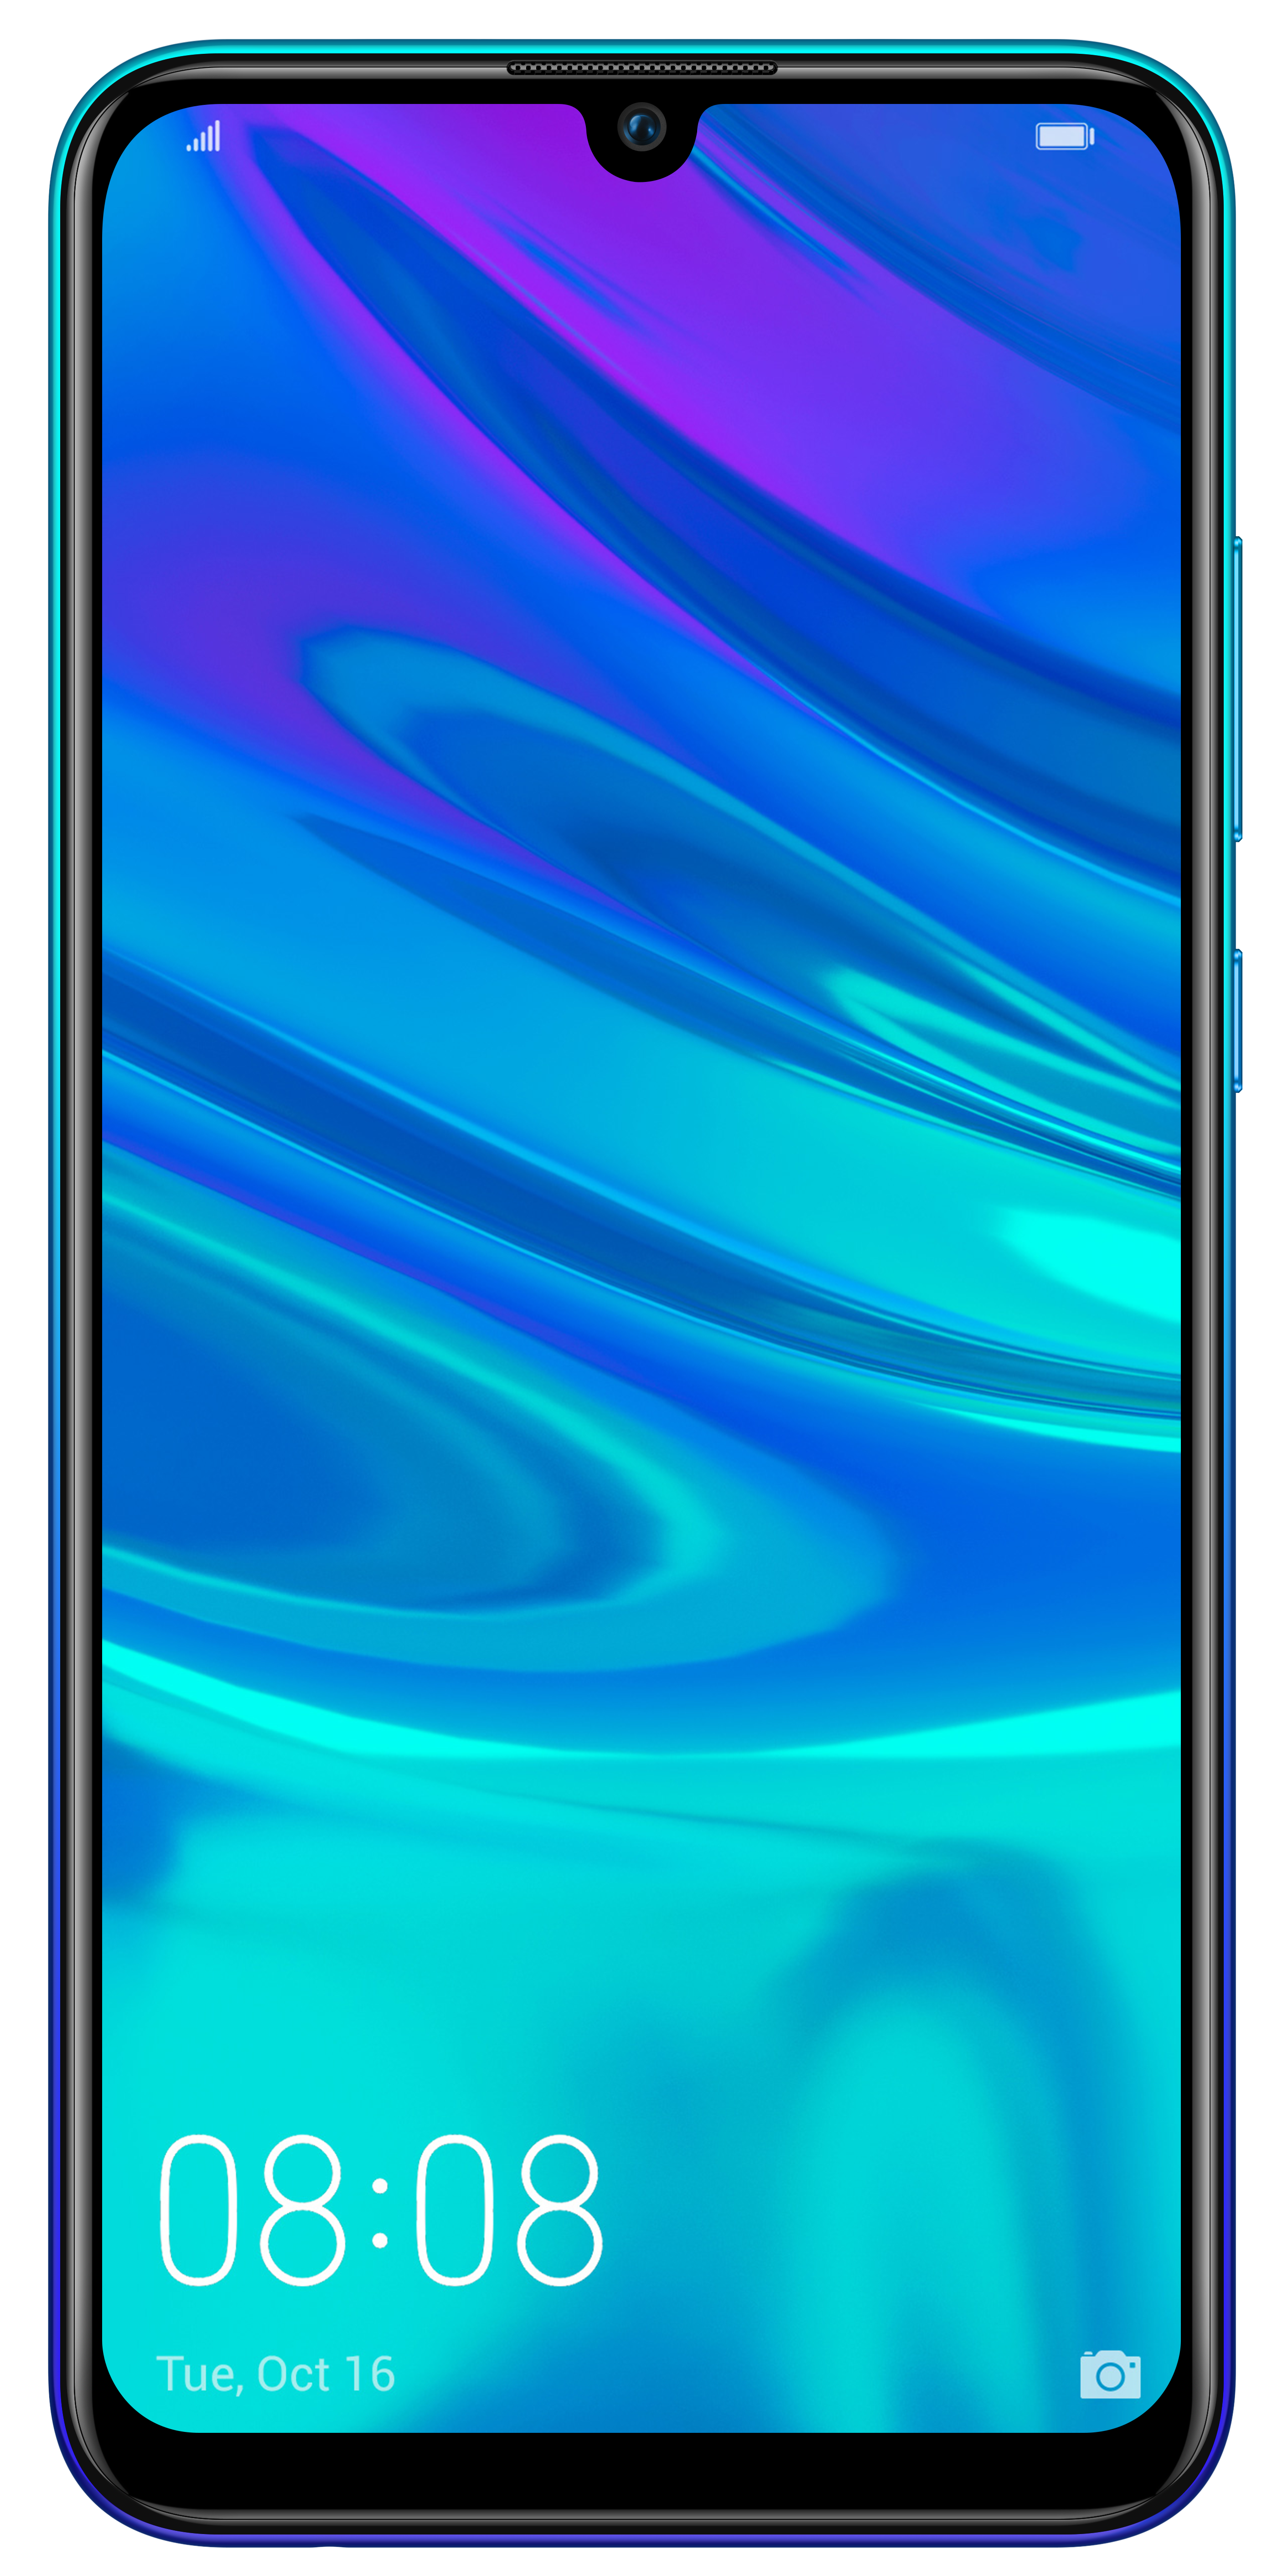 Huawei P Smart 2019 Aurora Blue